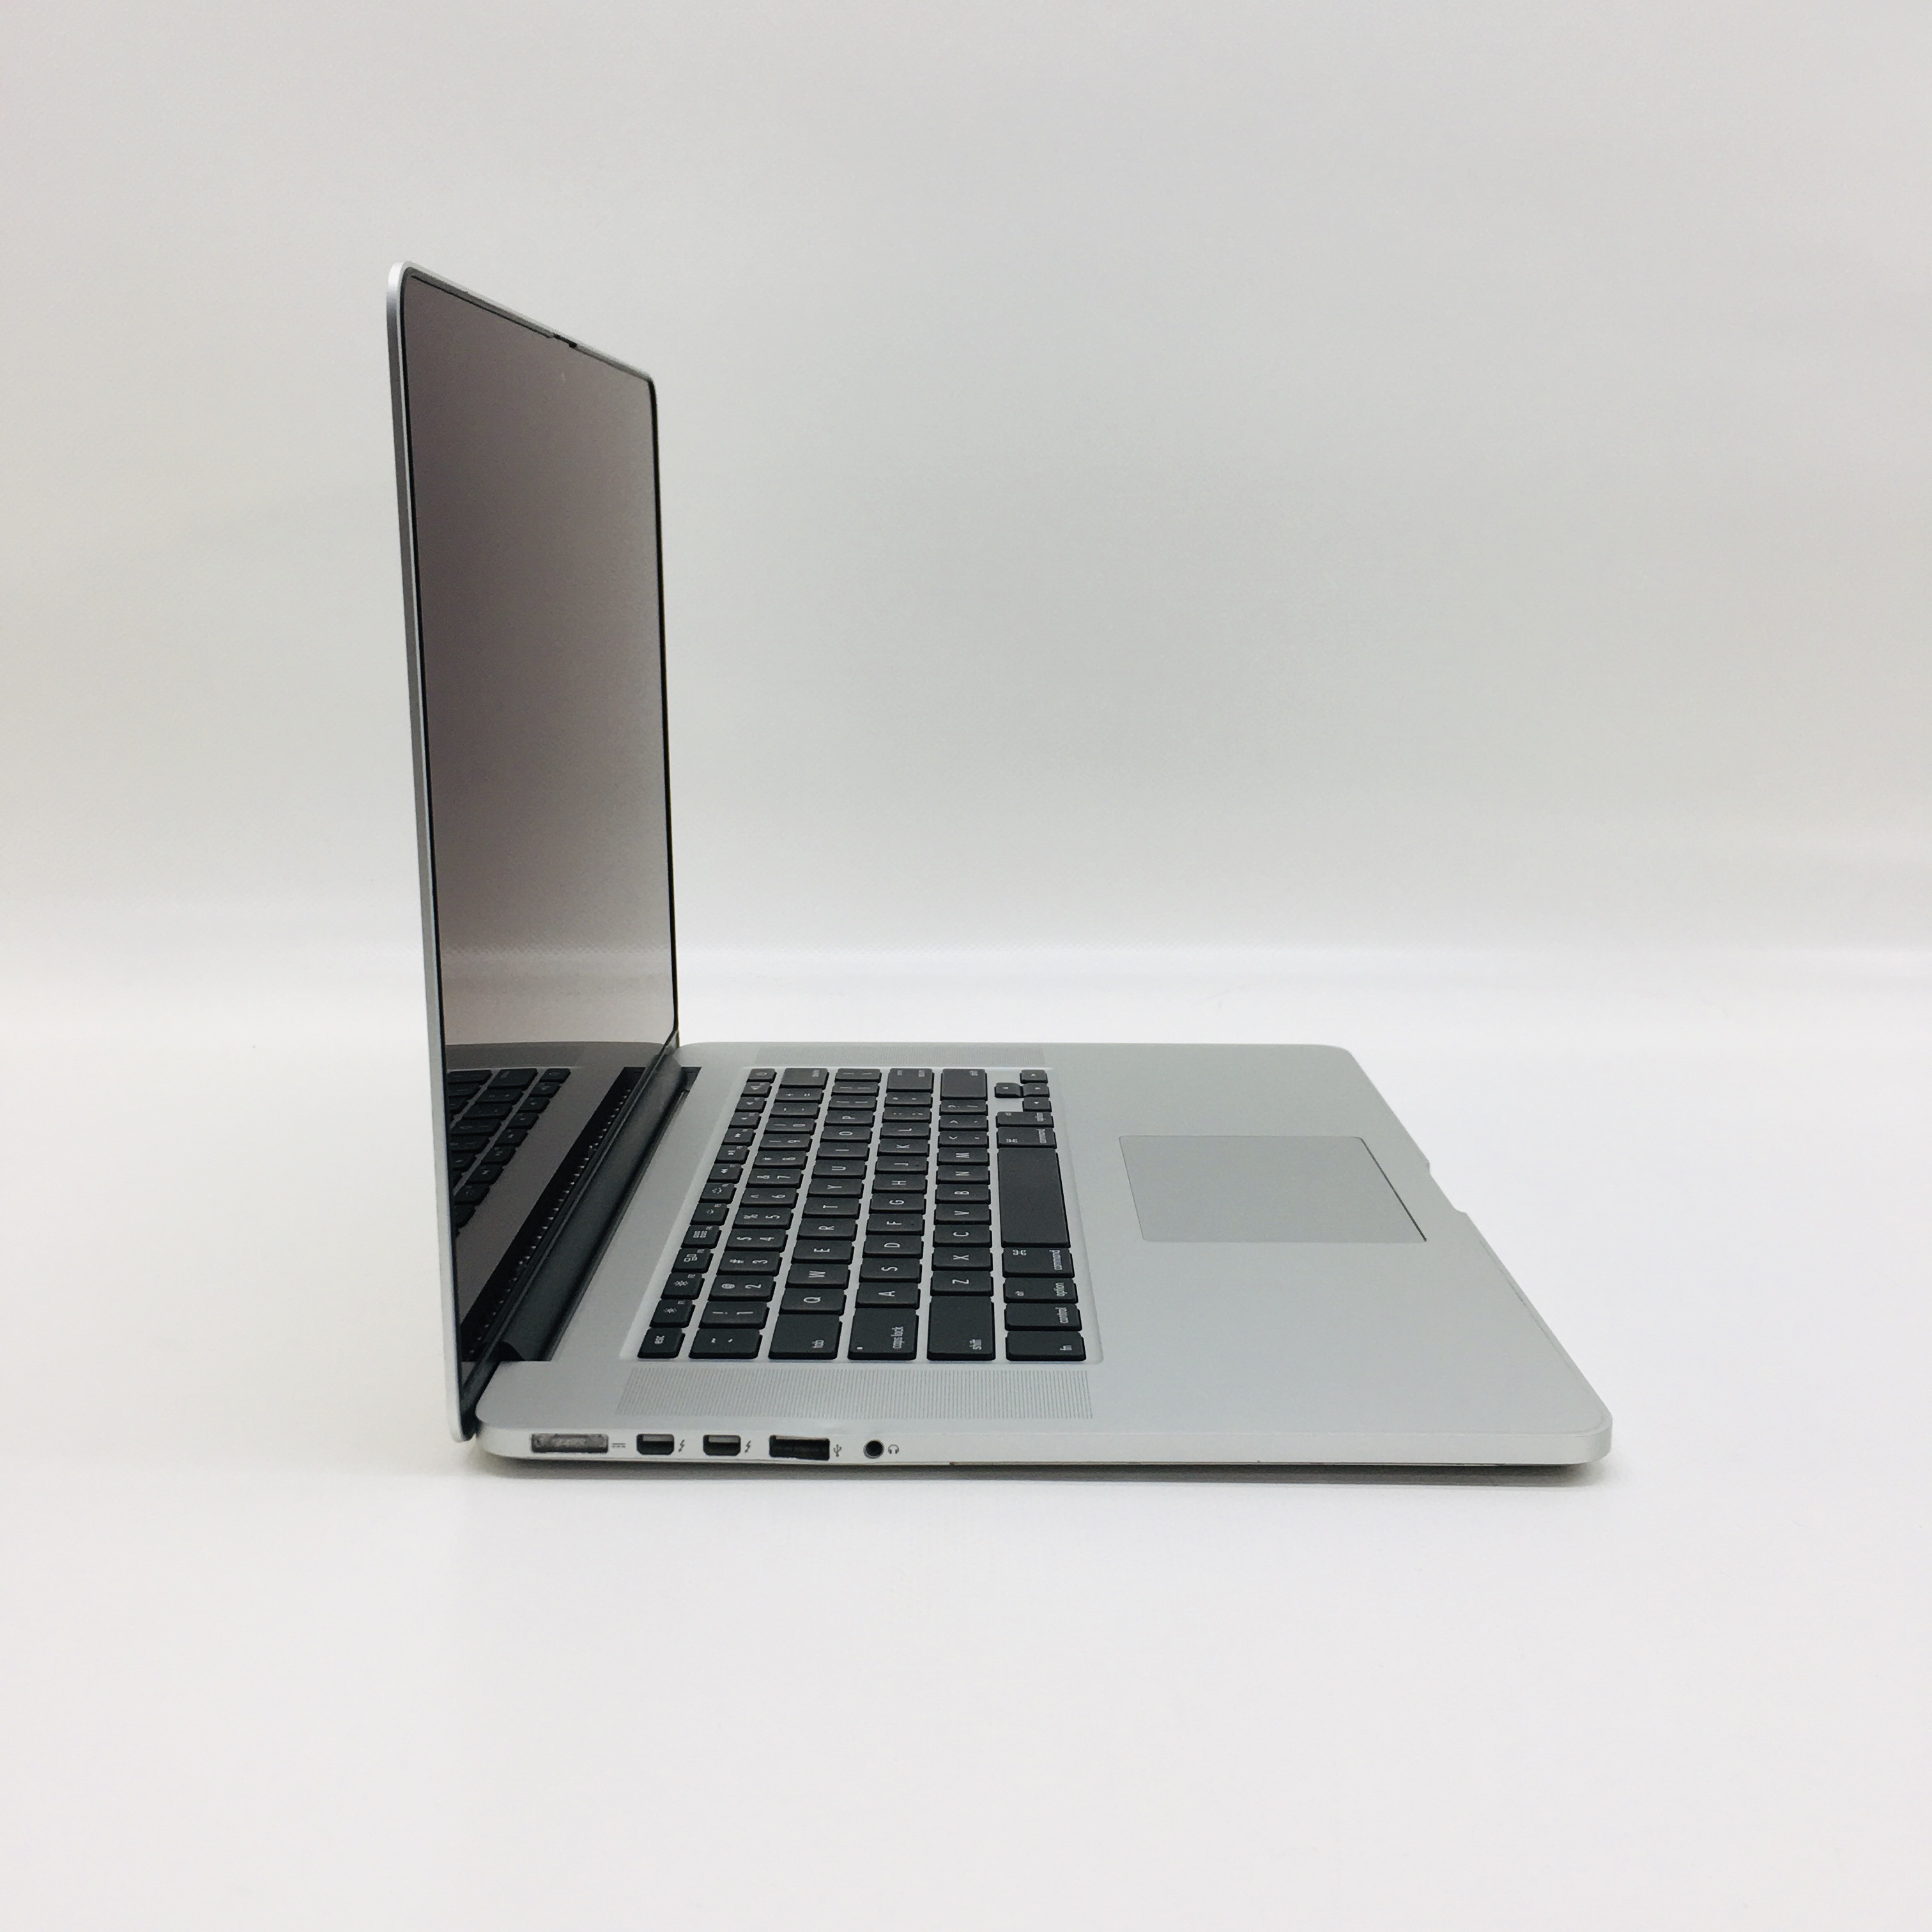 MacBook Pro Retina 15" Late 2013 (Intel Quad-Core i7 2.6 GHz 16 GB RAM 1 TB SSD), Intel Quad-Core i7 2.6 GHz, 16 GB RAM, 1 TB SSD, image 2